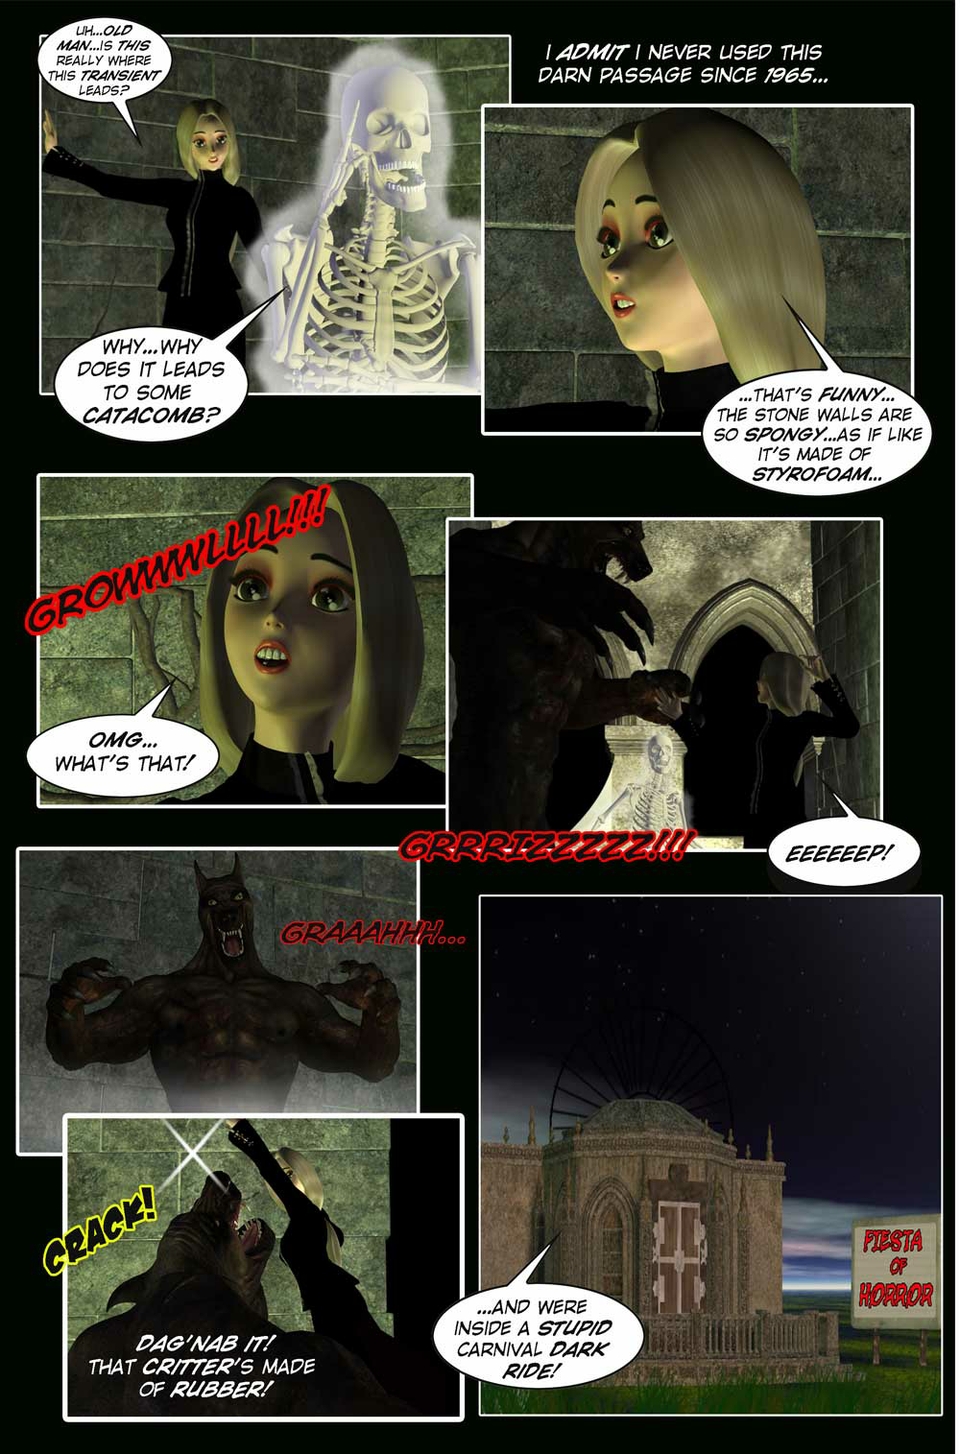 Page 27 (Carnival Dark Ride)